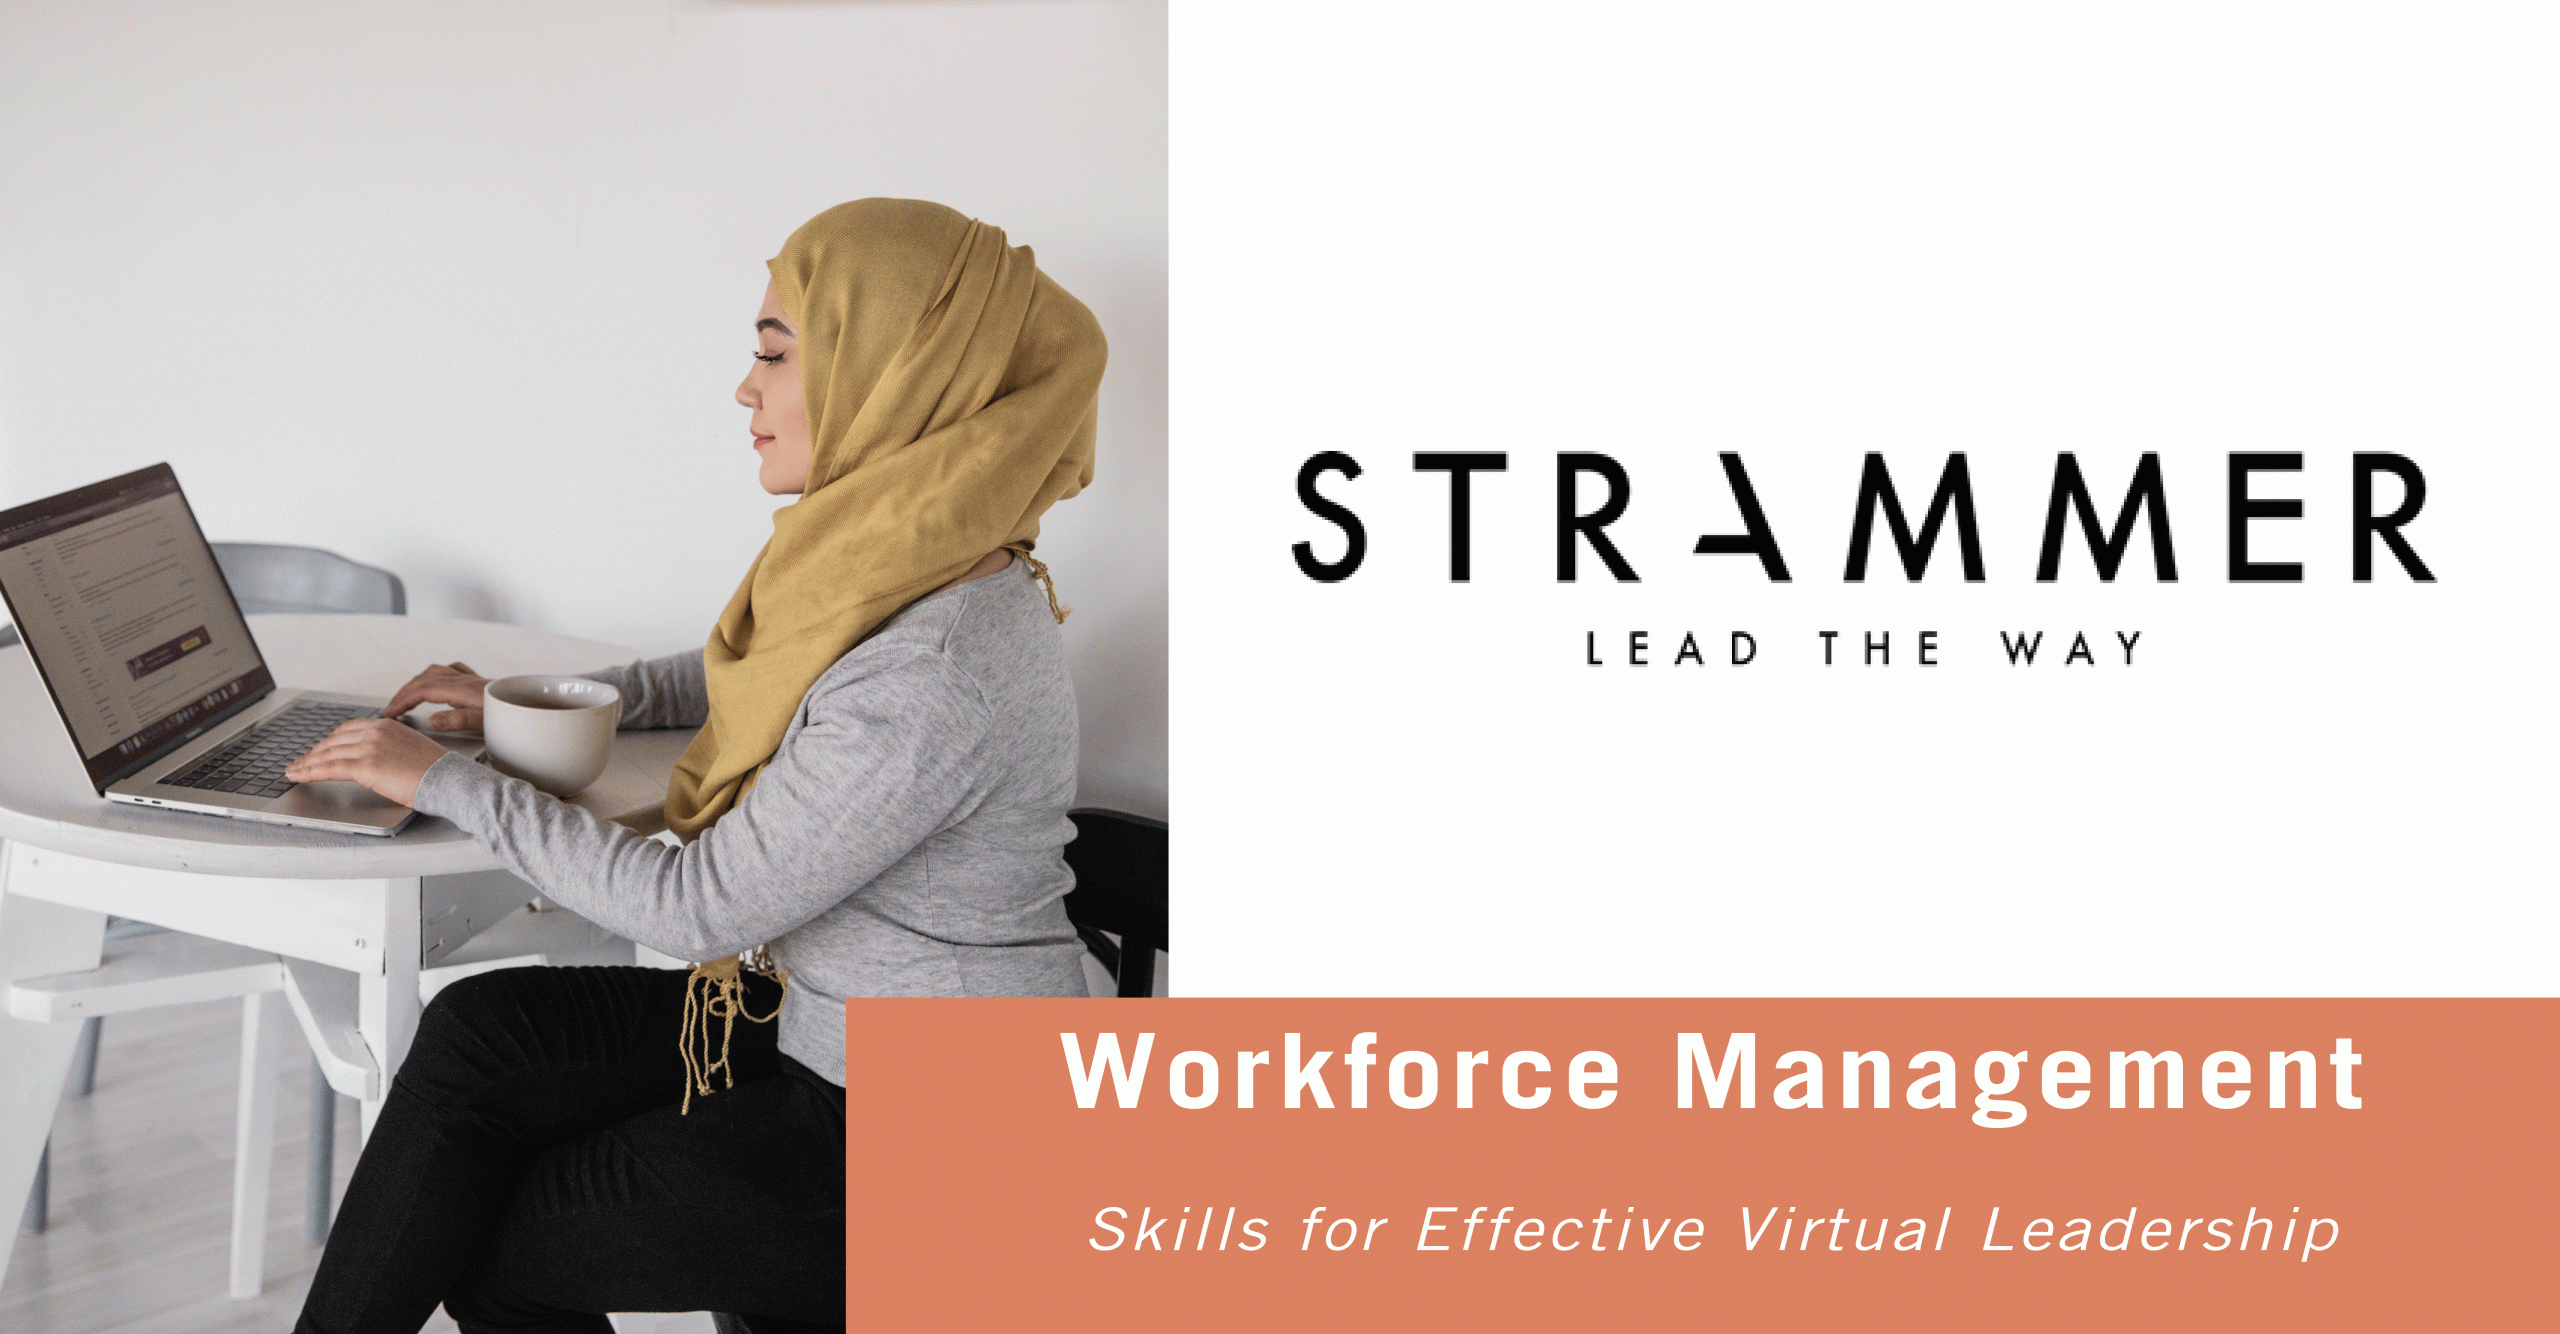 Skills for Effective Virtual Leadership